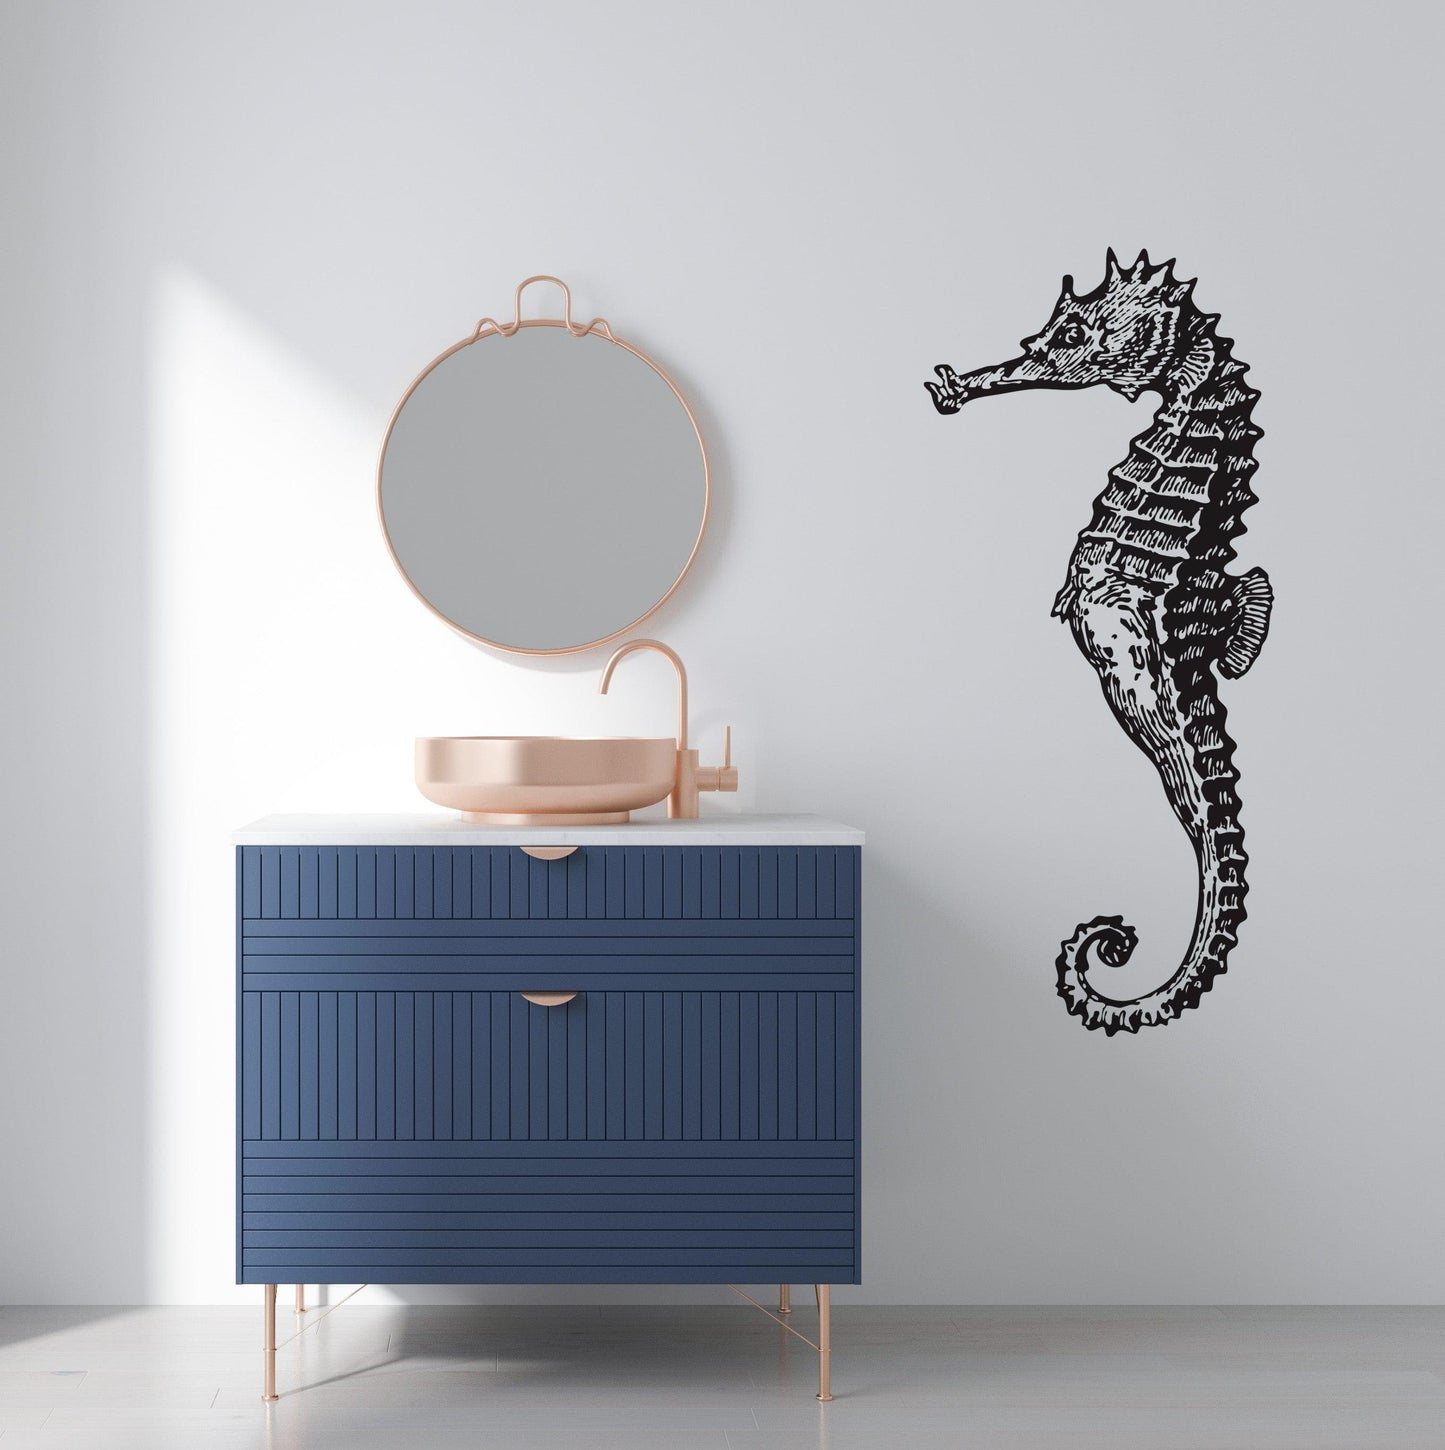 Seahorse Wall Decal Sticker. Nautical Theme, Beach Theme, Bathroom / Bedroom Decor, Home Decor. #702